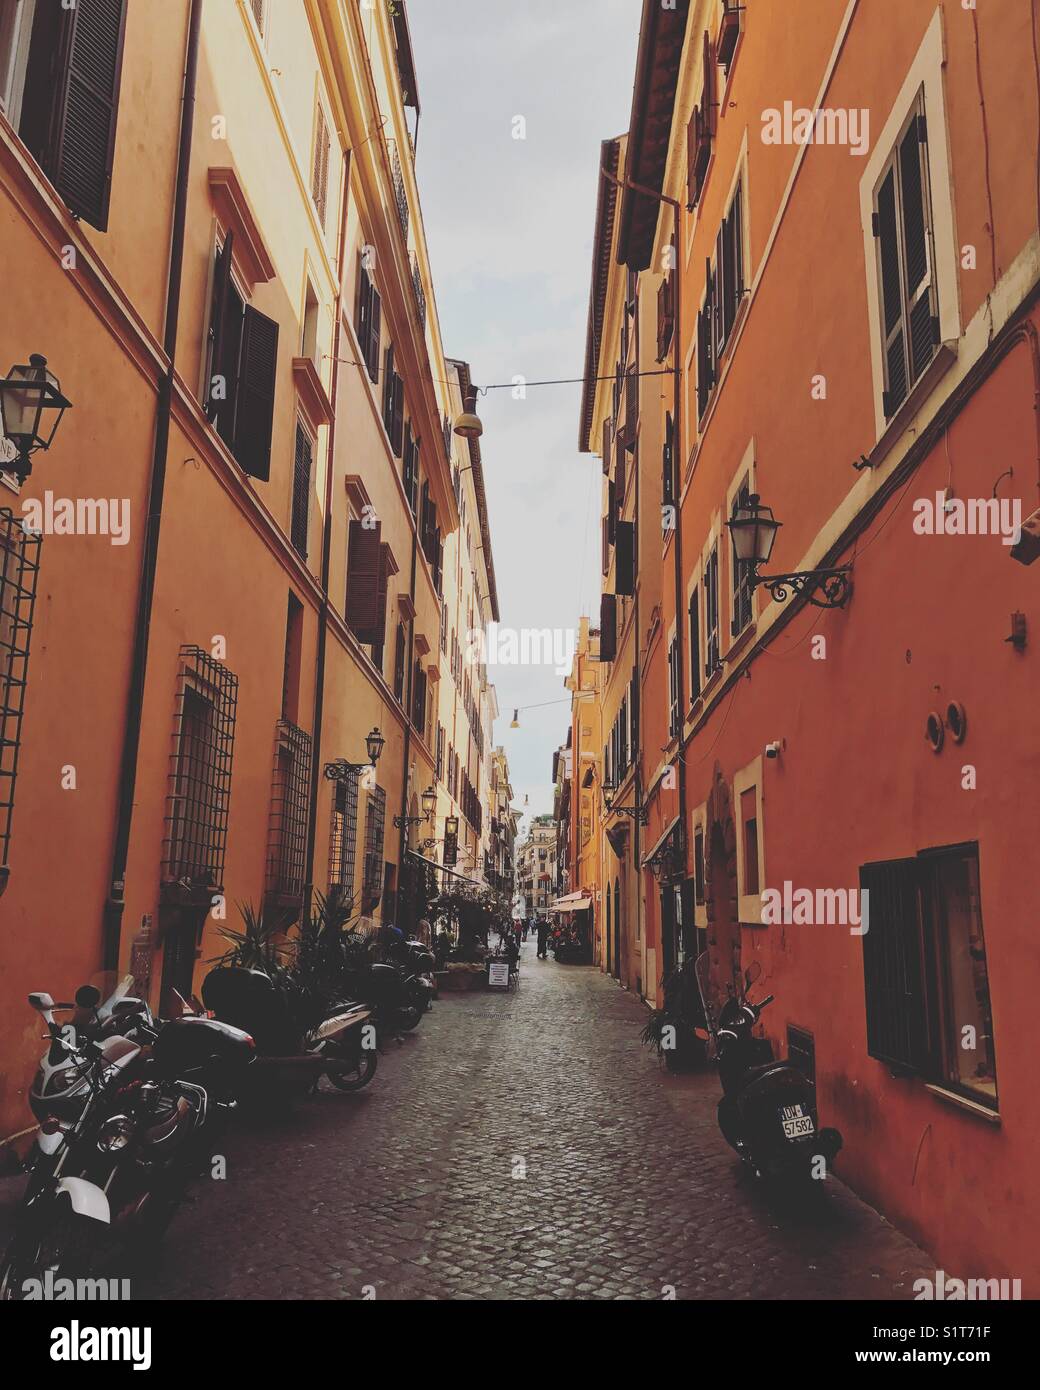 Typical Rome street Stock Photo - Alamy